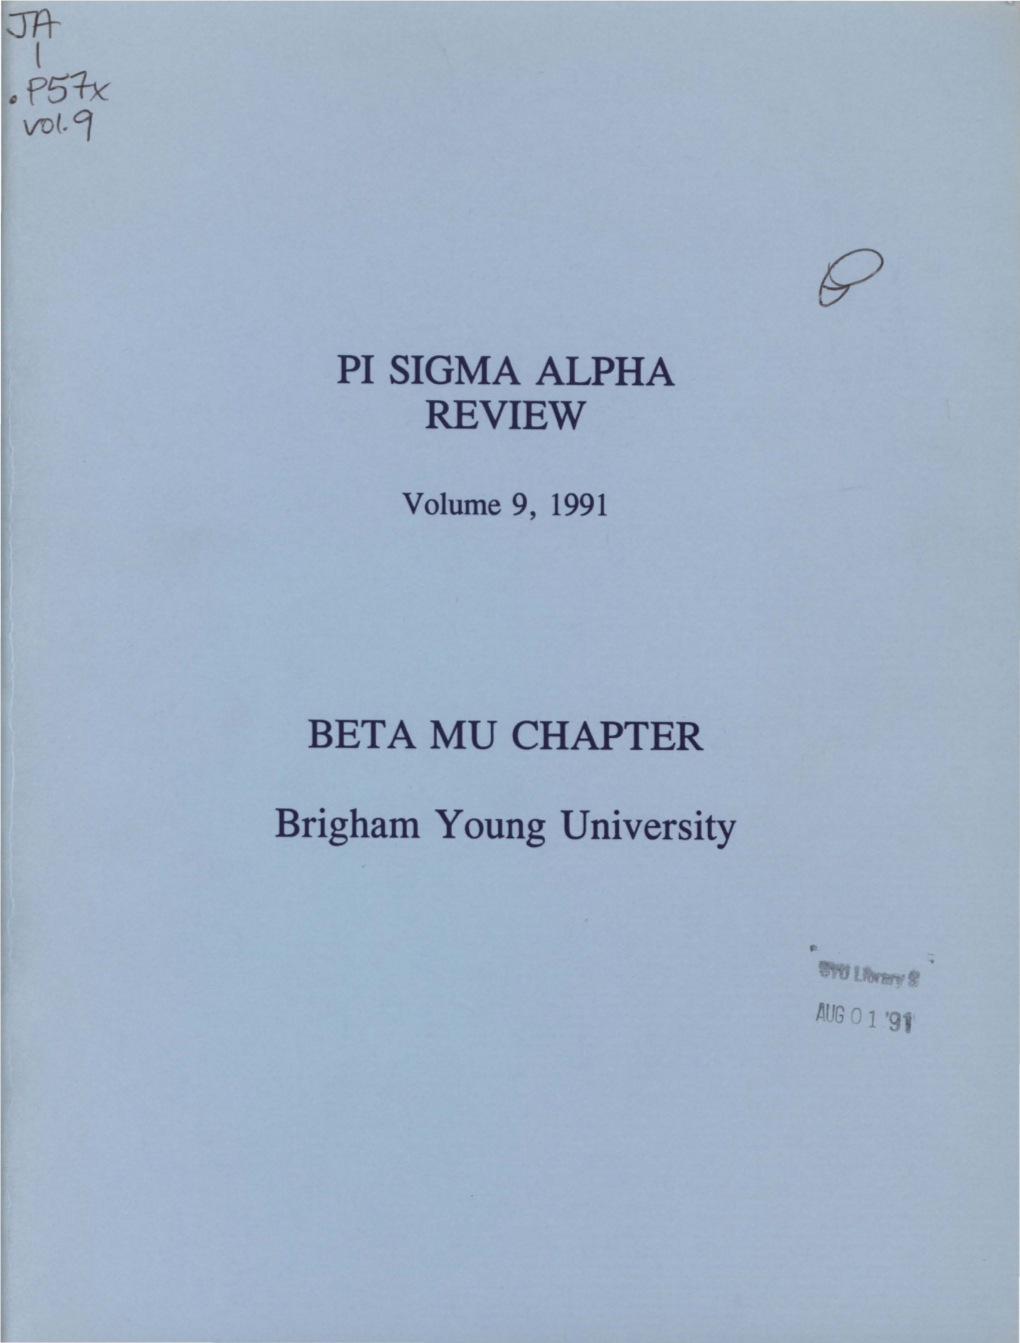 Pi Sigma Alpha Review, Vol. 9